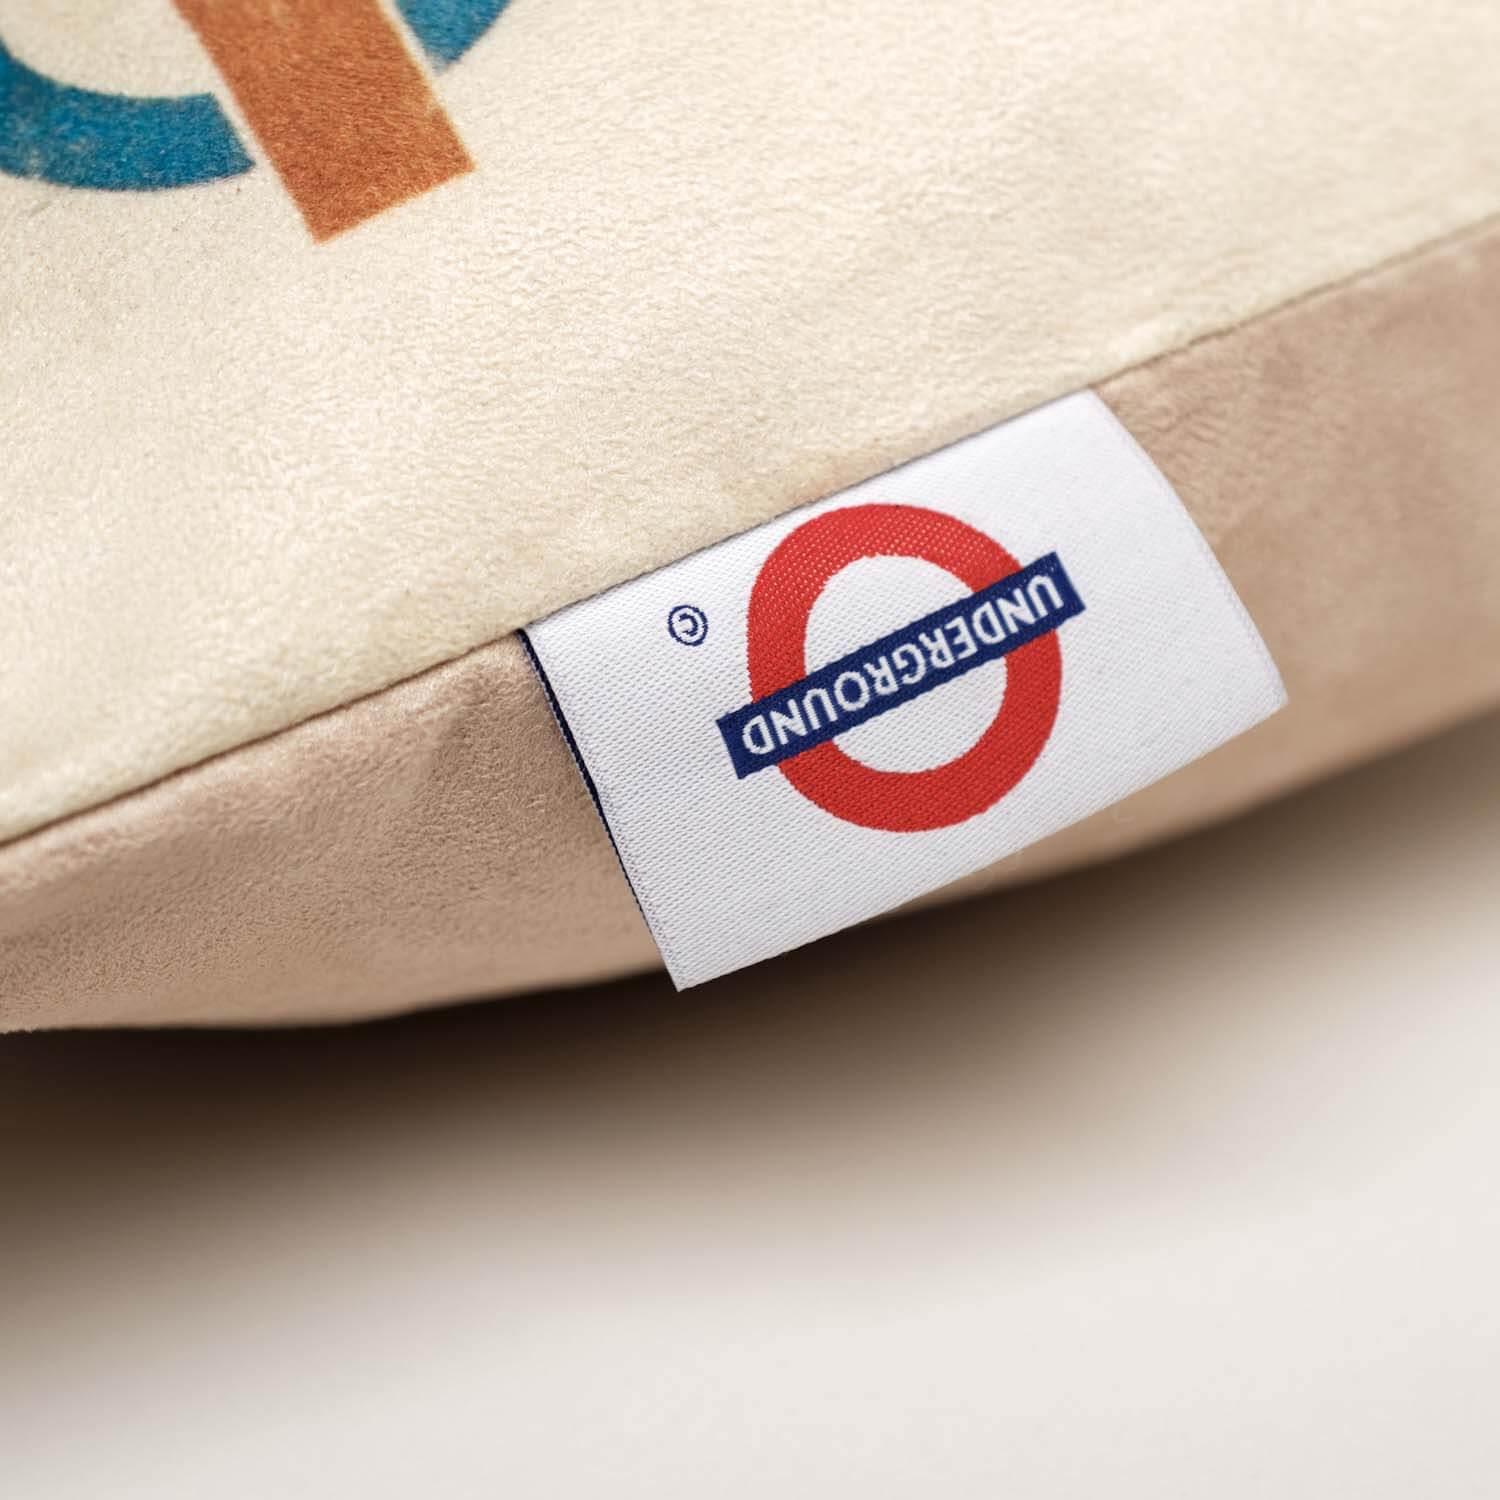 Crocus Time 1 - London Transport Cushion - Handmade Cushions UK - WeLoveCushions